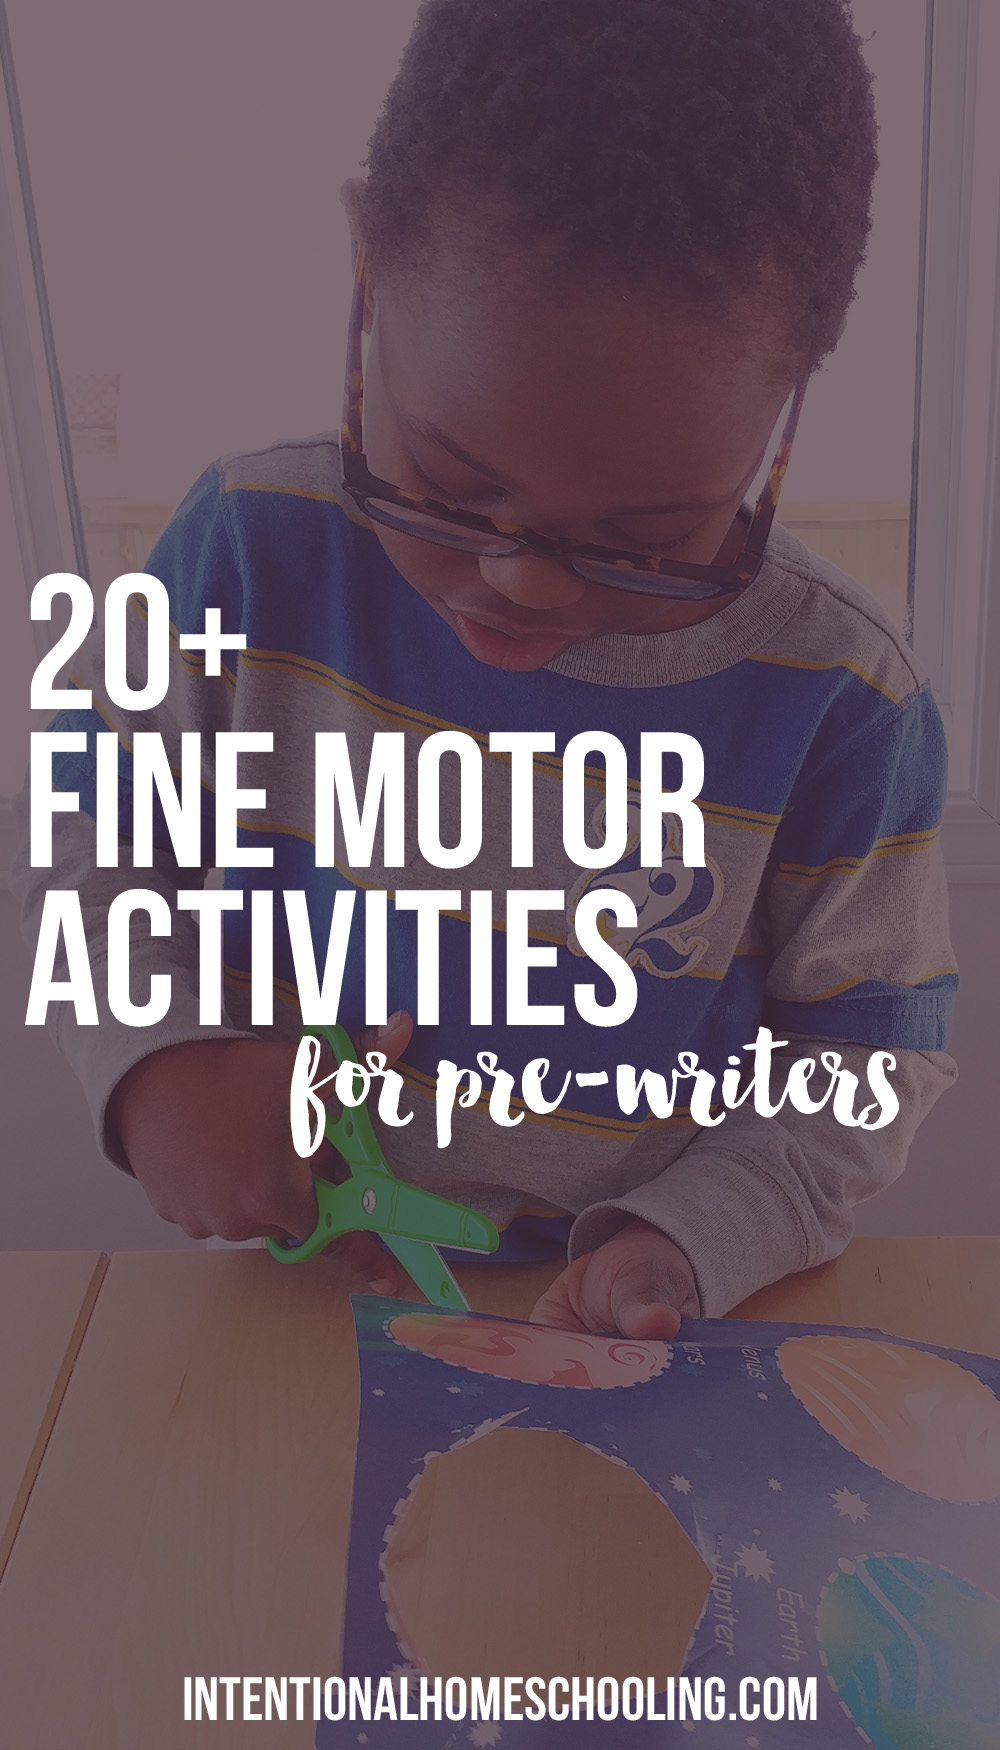 More than 20 activities to help develop fine motor skills in preschool pre-writers.